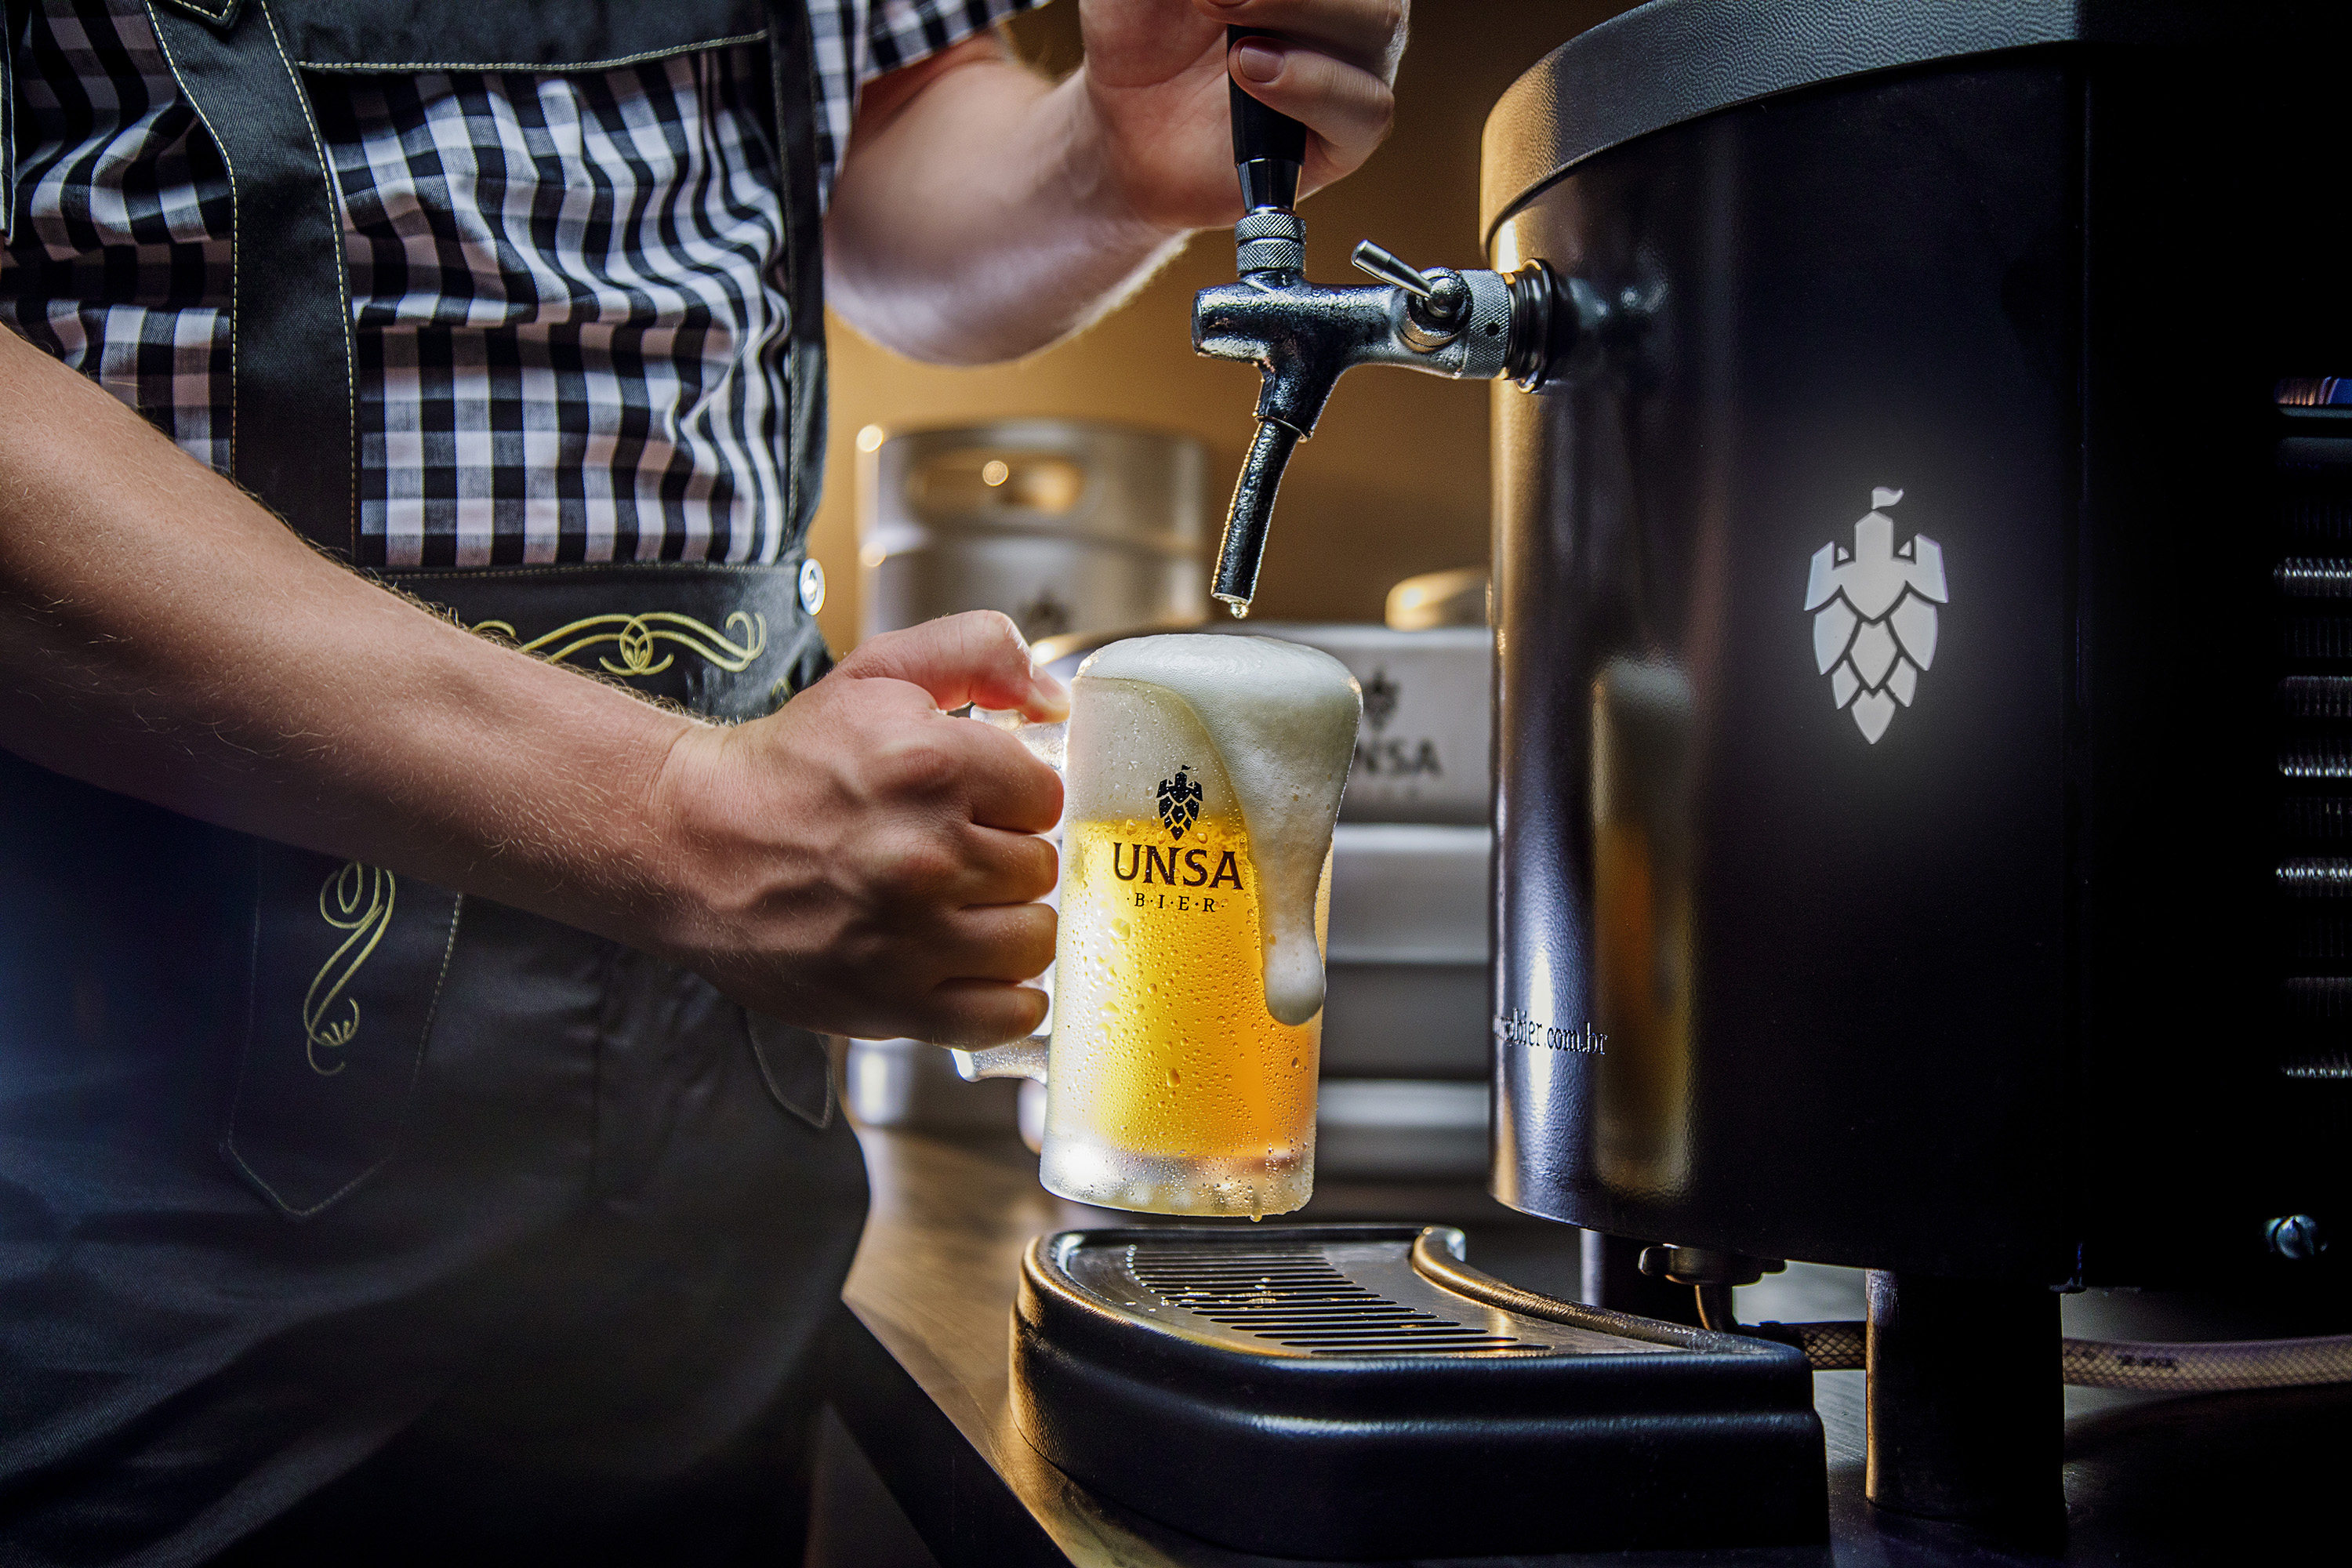 Unsa Bier - Cerveja Artesanal - Branding